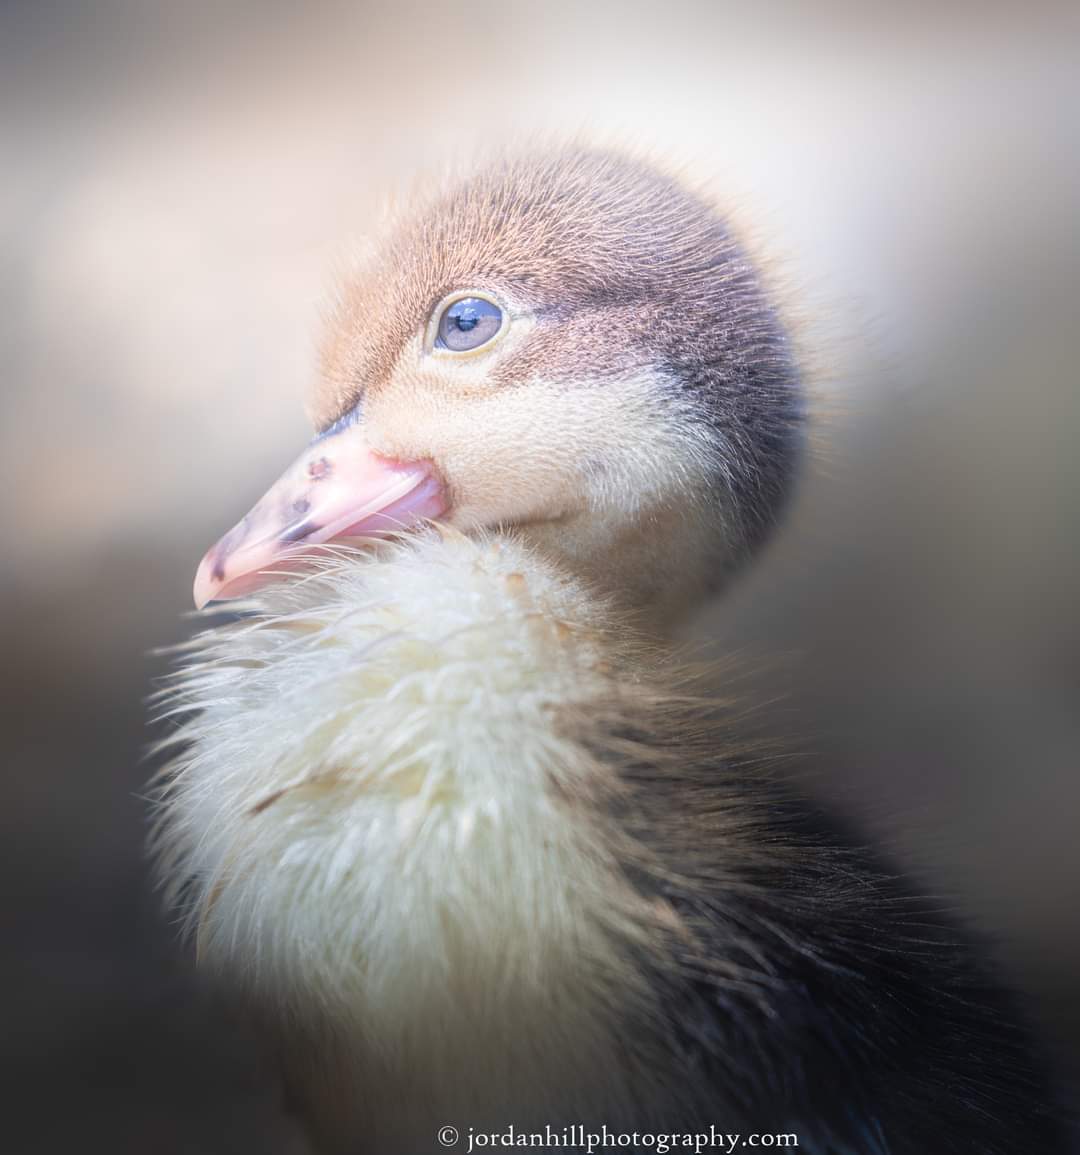 Duckling Portrait 
jordanhillphotography.com/featured/baby-…

#duckling #duckies #duck #babyducks #pic #nature #naturephotography #wildlife #art #wildanimals #babybird #animalportrait #photography #photographer #cuteness #cutenessoverload #cutie #photo #adorable #AYearForArt #BuyIntoArt